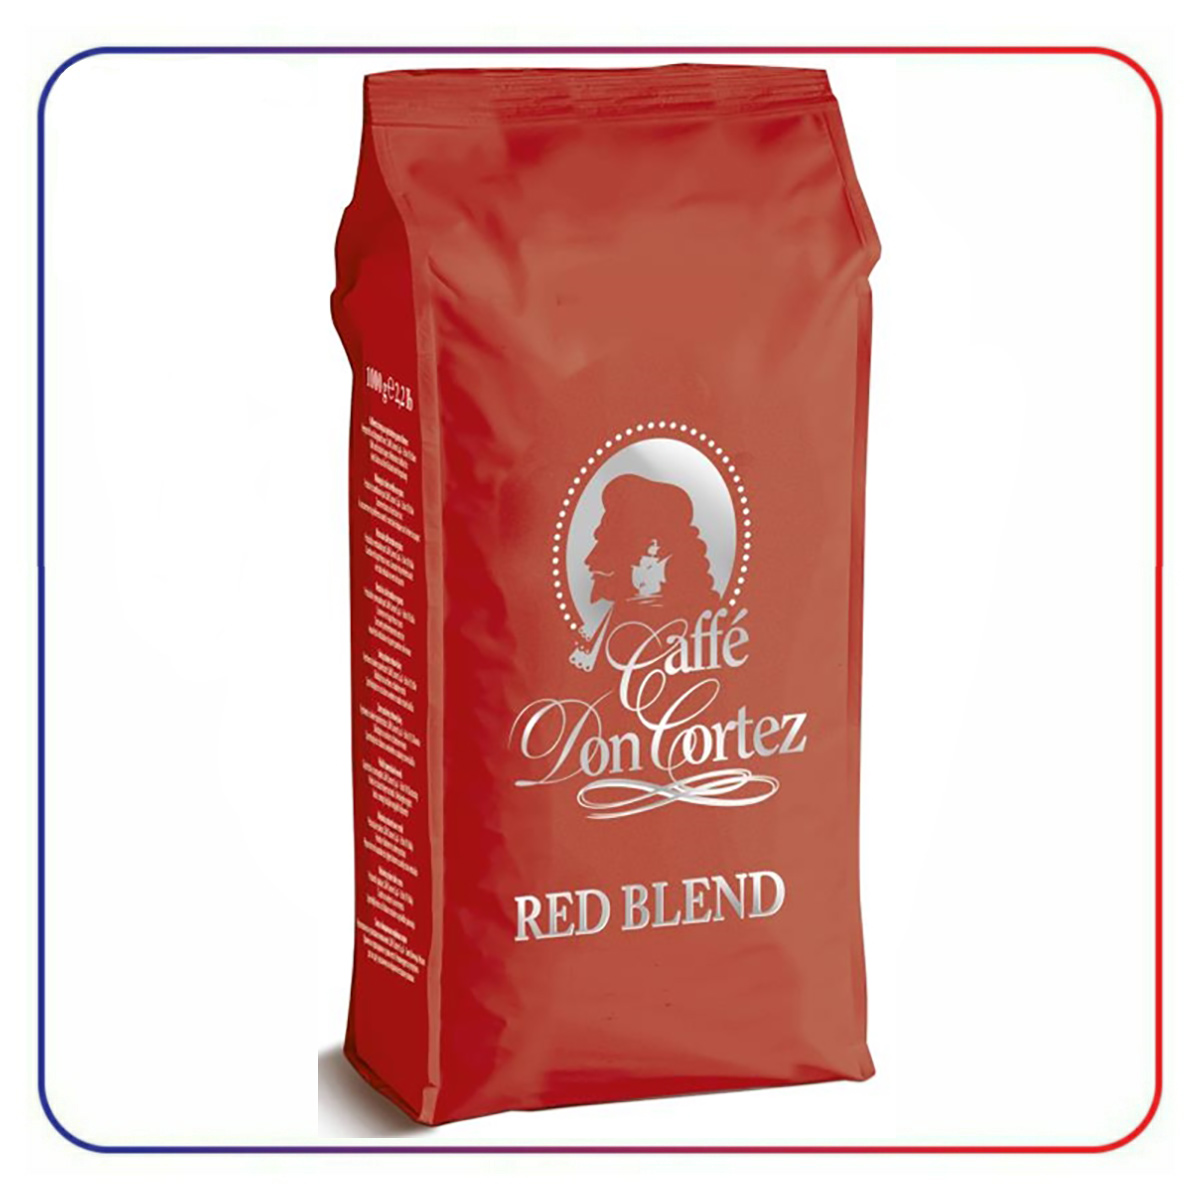 دانه قهوه دون کورتز قرمز بلند DON CORTEZ RED BLEND